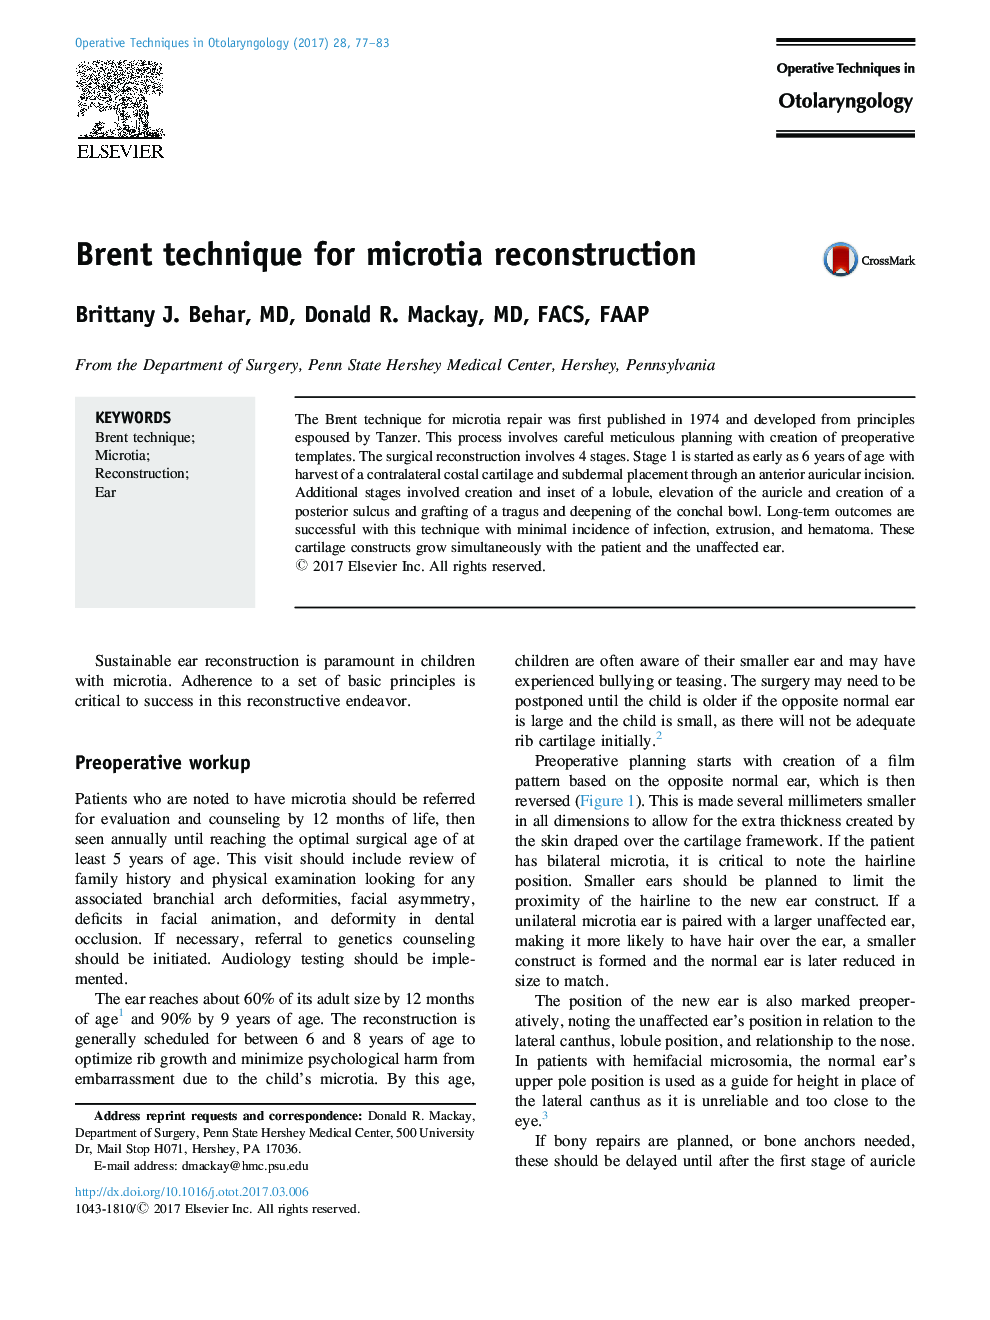 Brent technique for microtia reconstruction